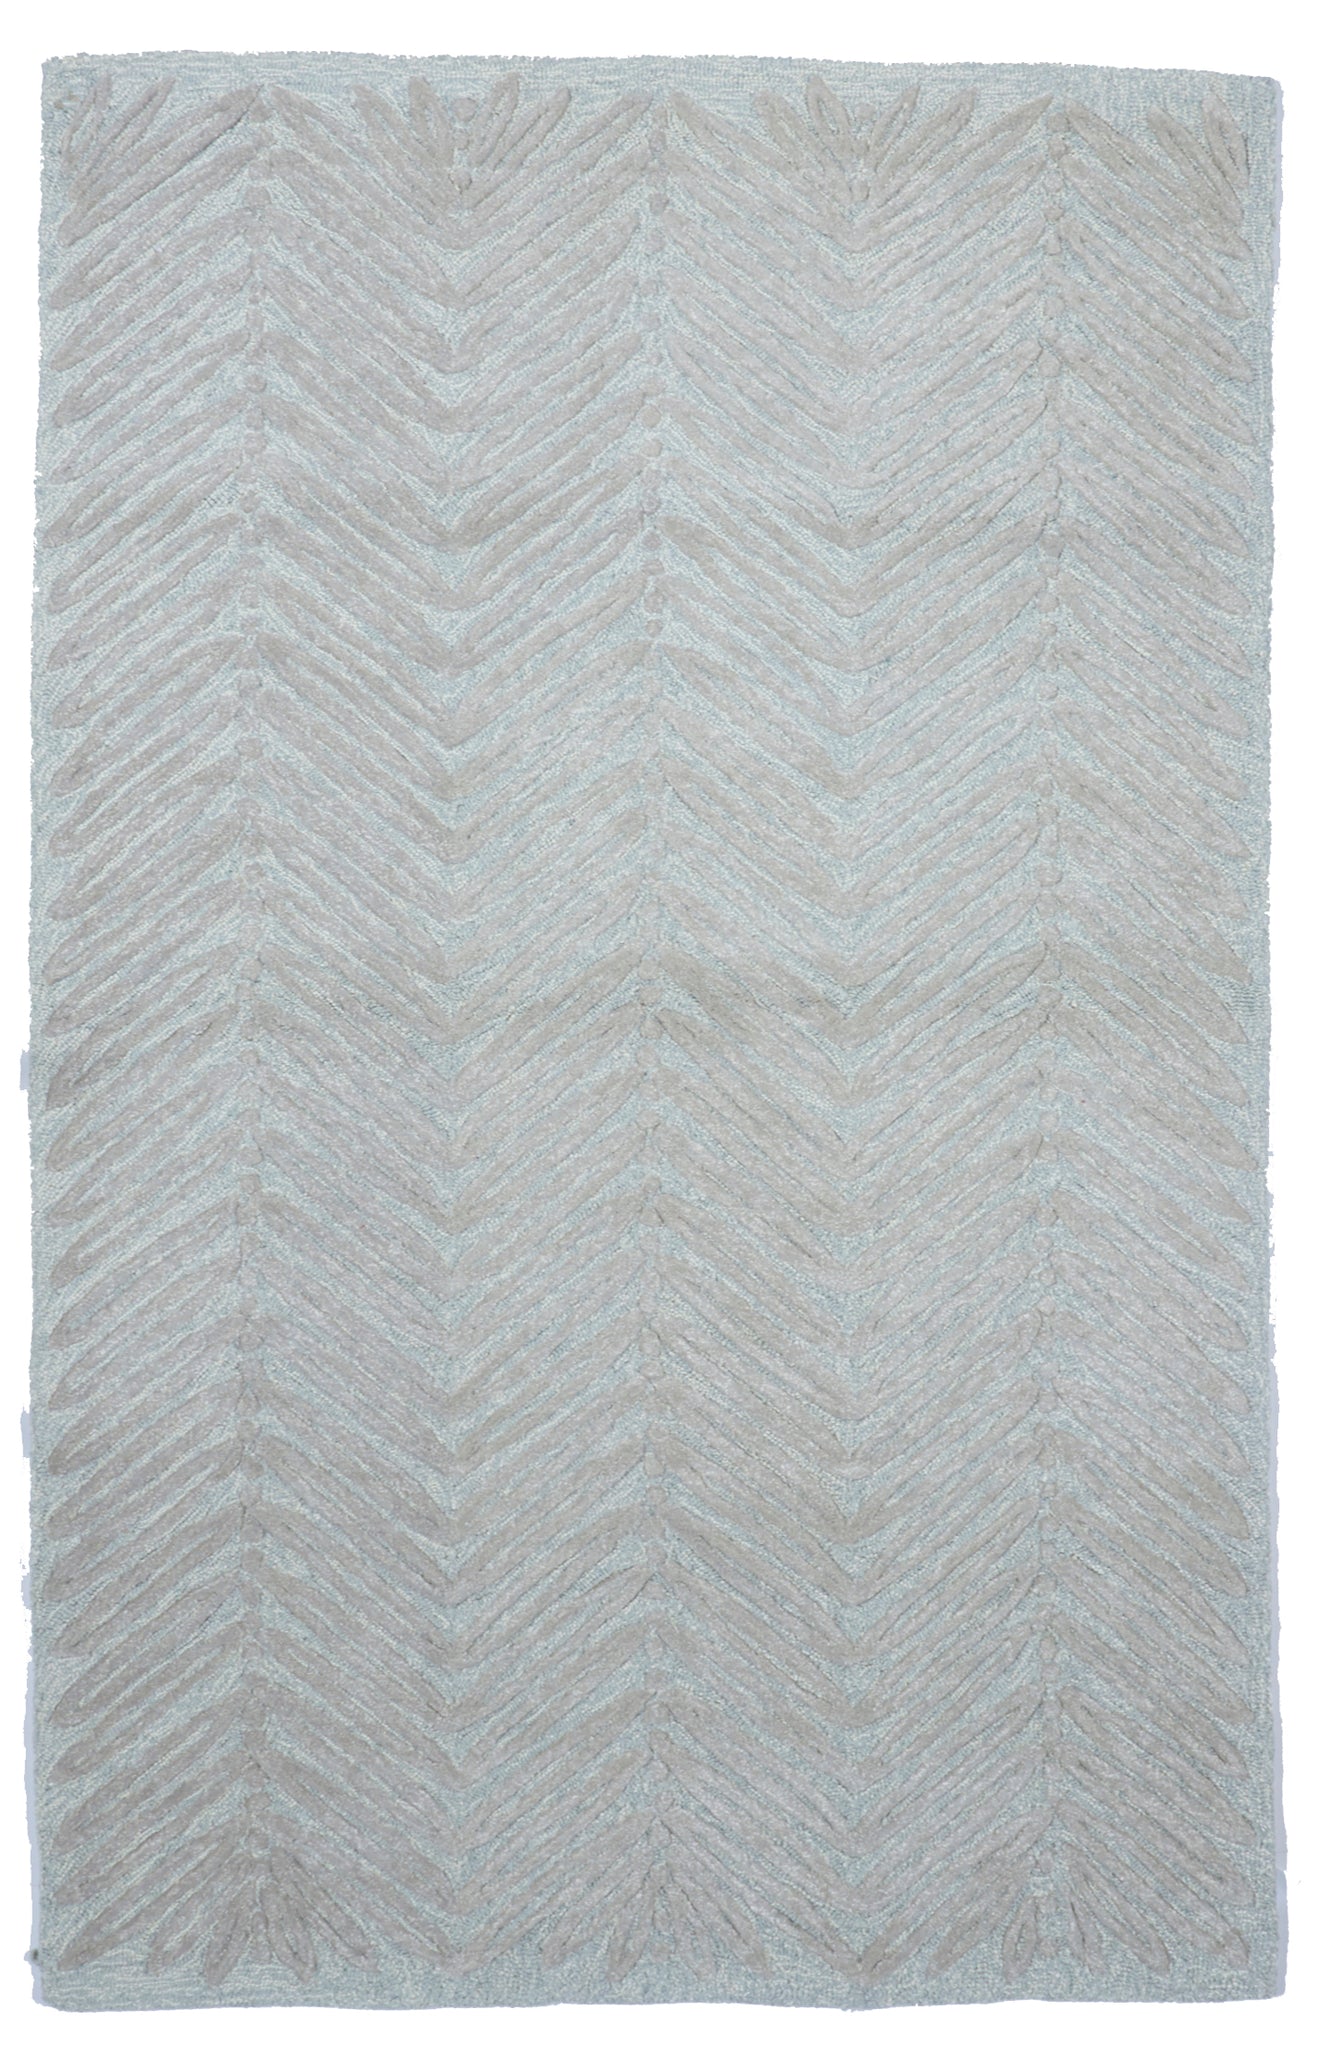 Transitional Tufted Gray Wool Rug 5' x 7'10 - IGotYourRug